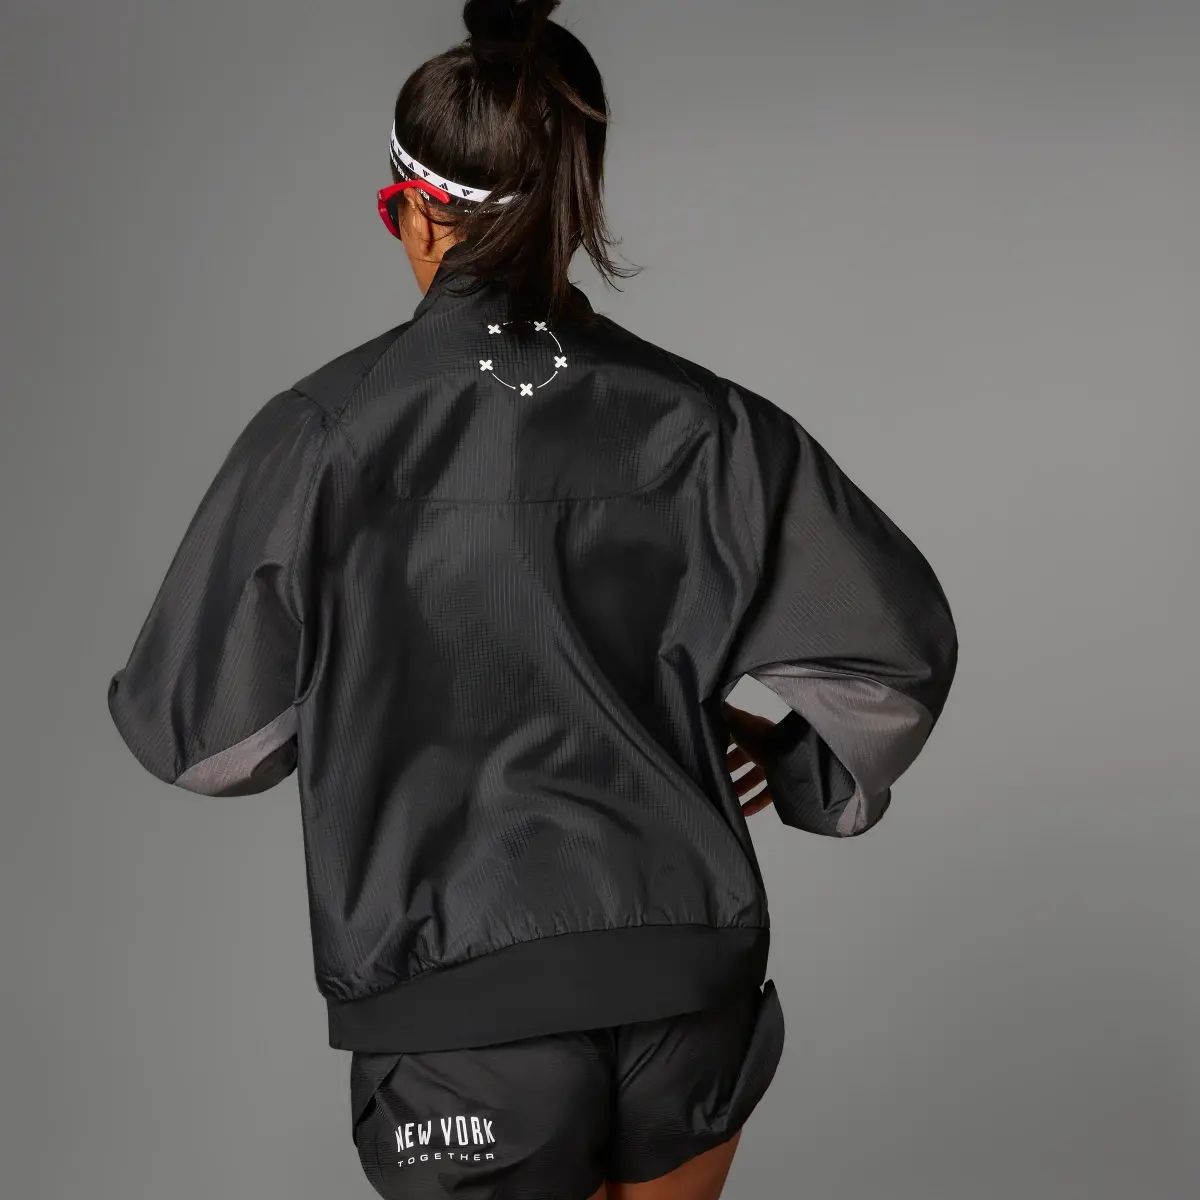 Adidas NYC Running Jacket (Gender Neutral). 2